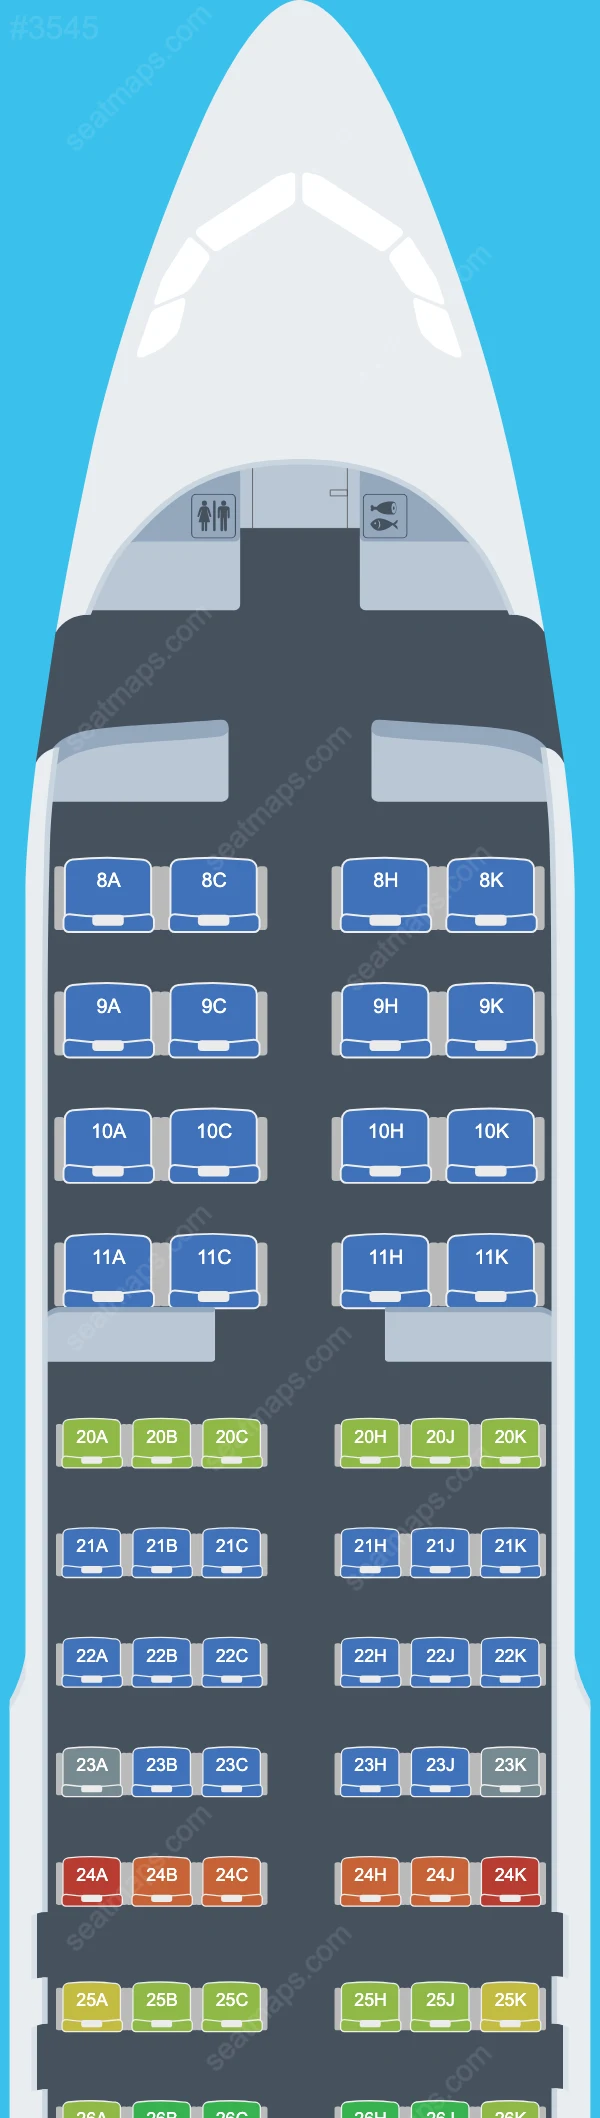 Egyptair Airbus A320-200 seatmap preview